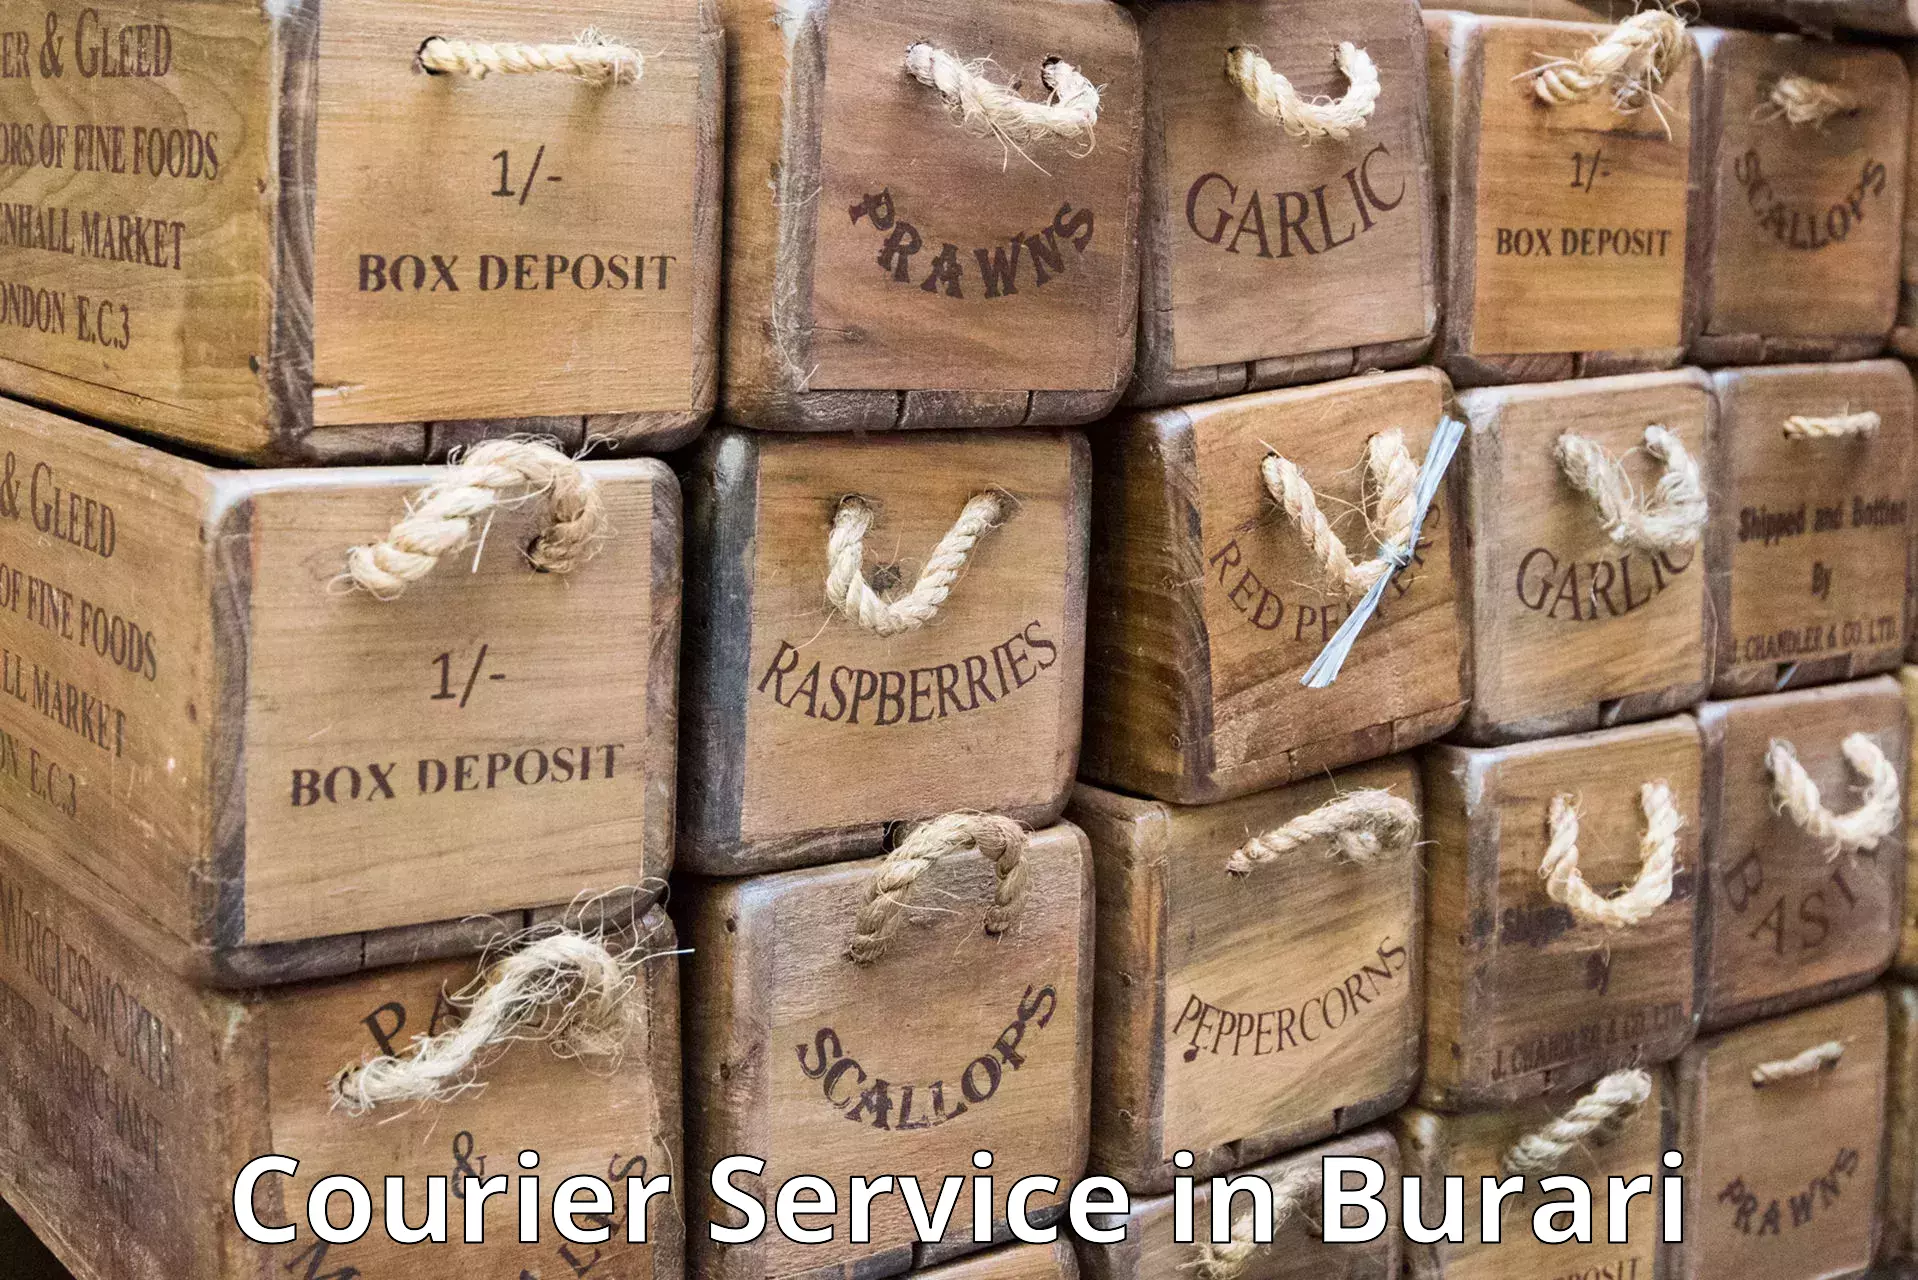 Logistics and distribution in Burari